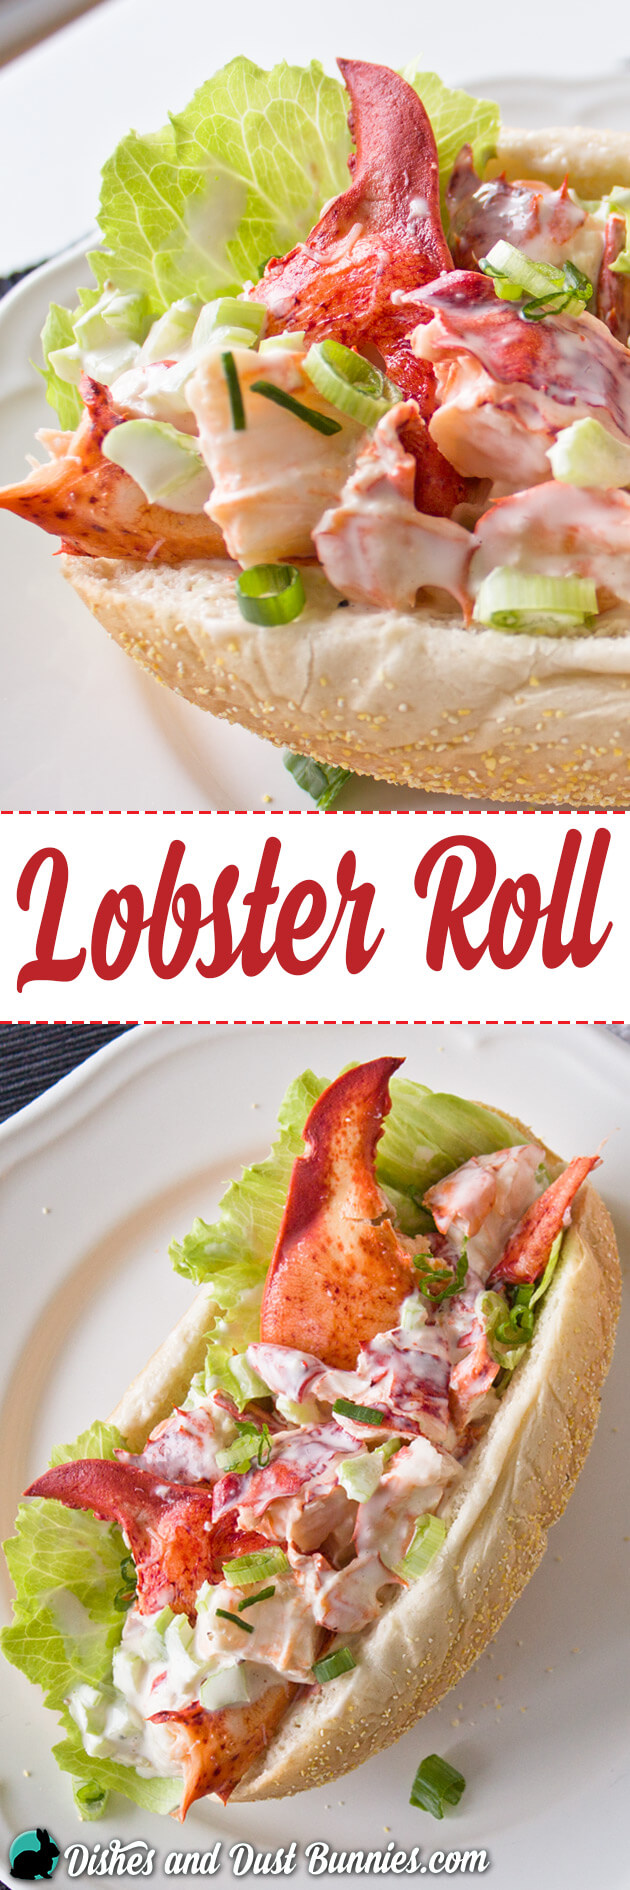 Lobster Roll from dishesanddustbunnies.com